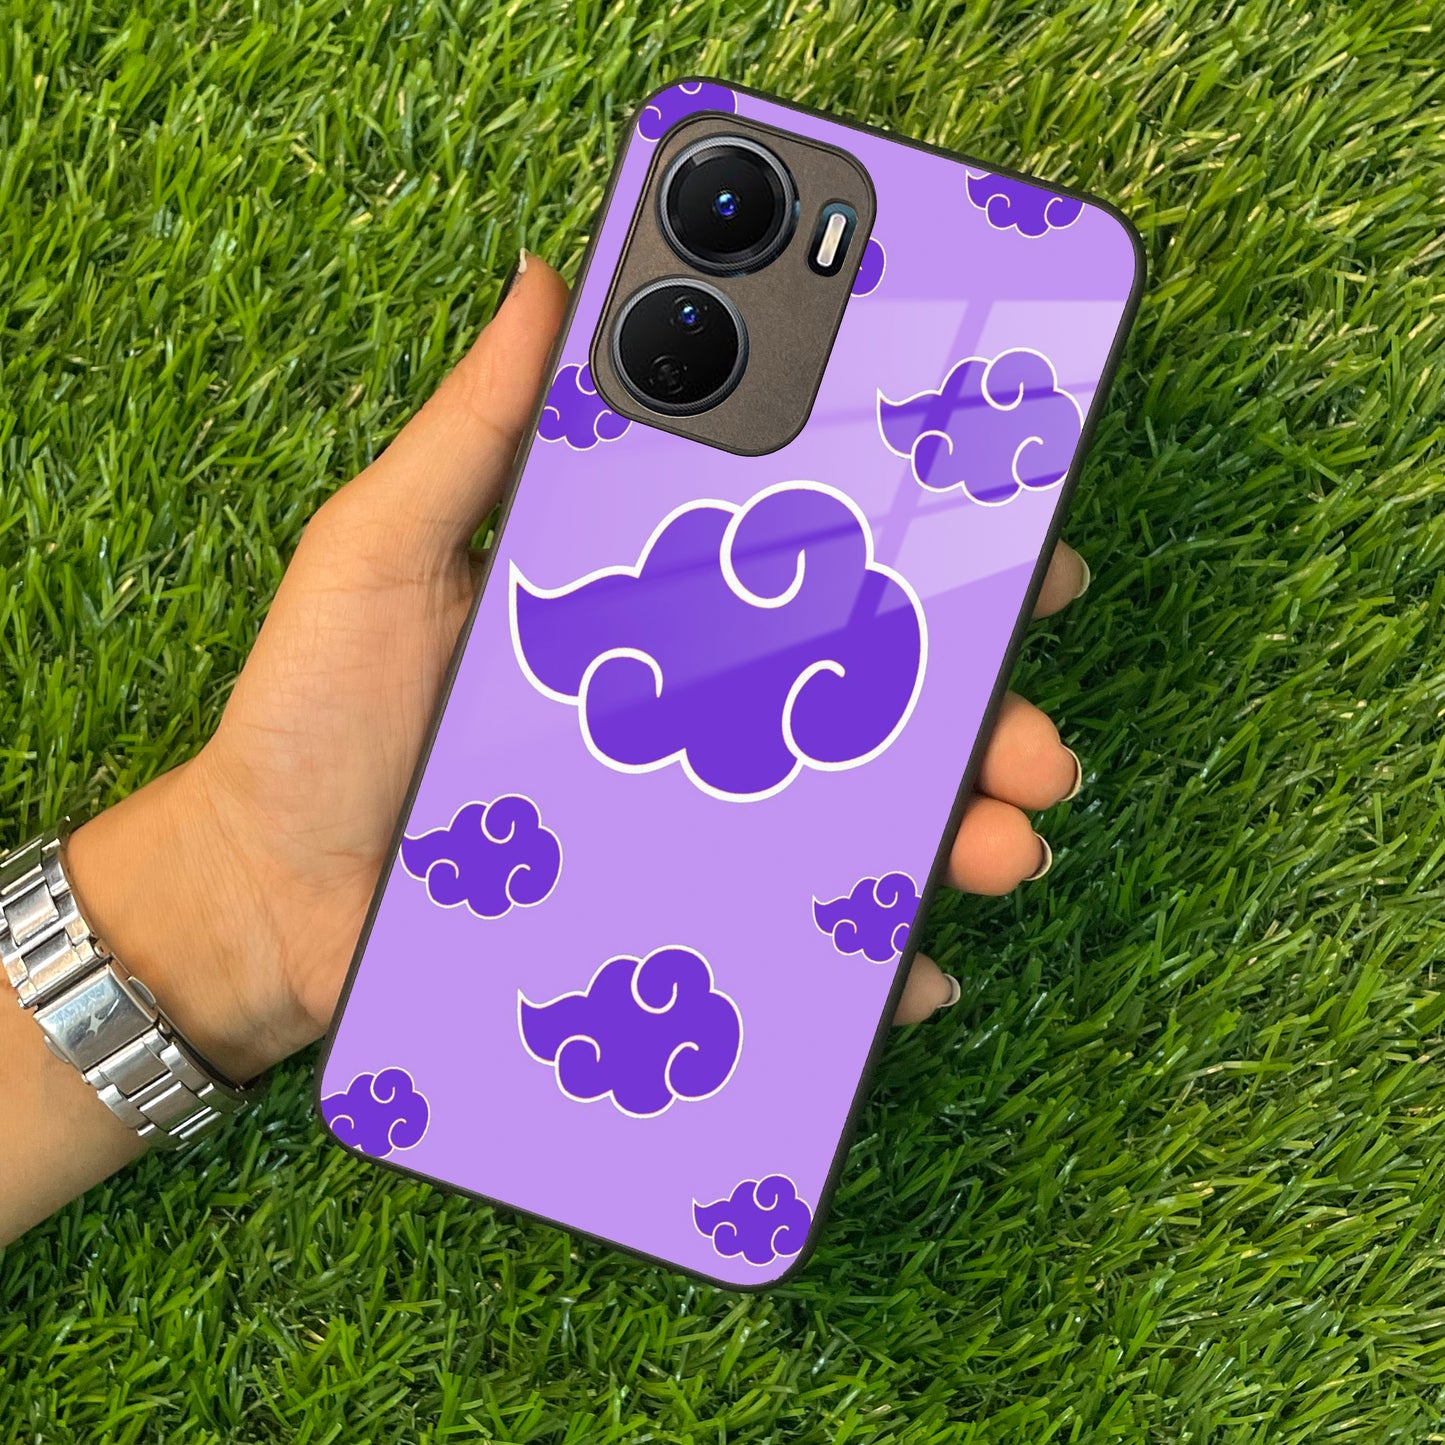 Purple Cloud Mobile Glass Phone Case For Vivo